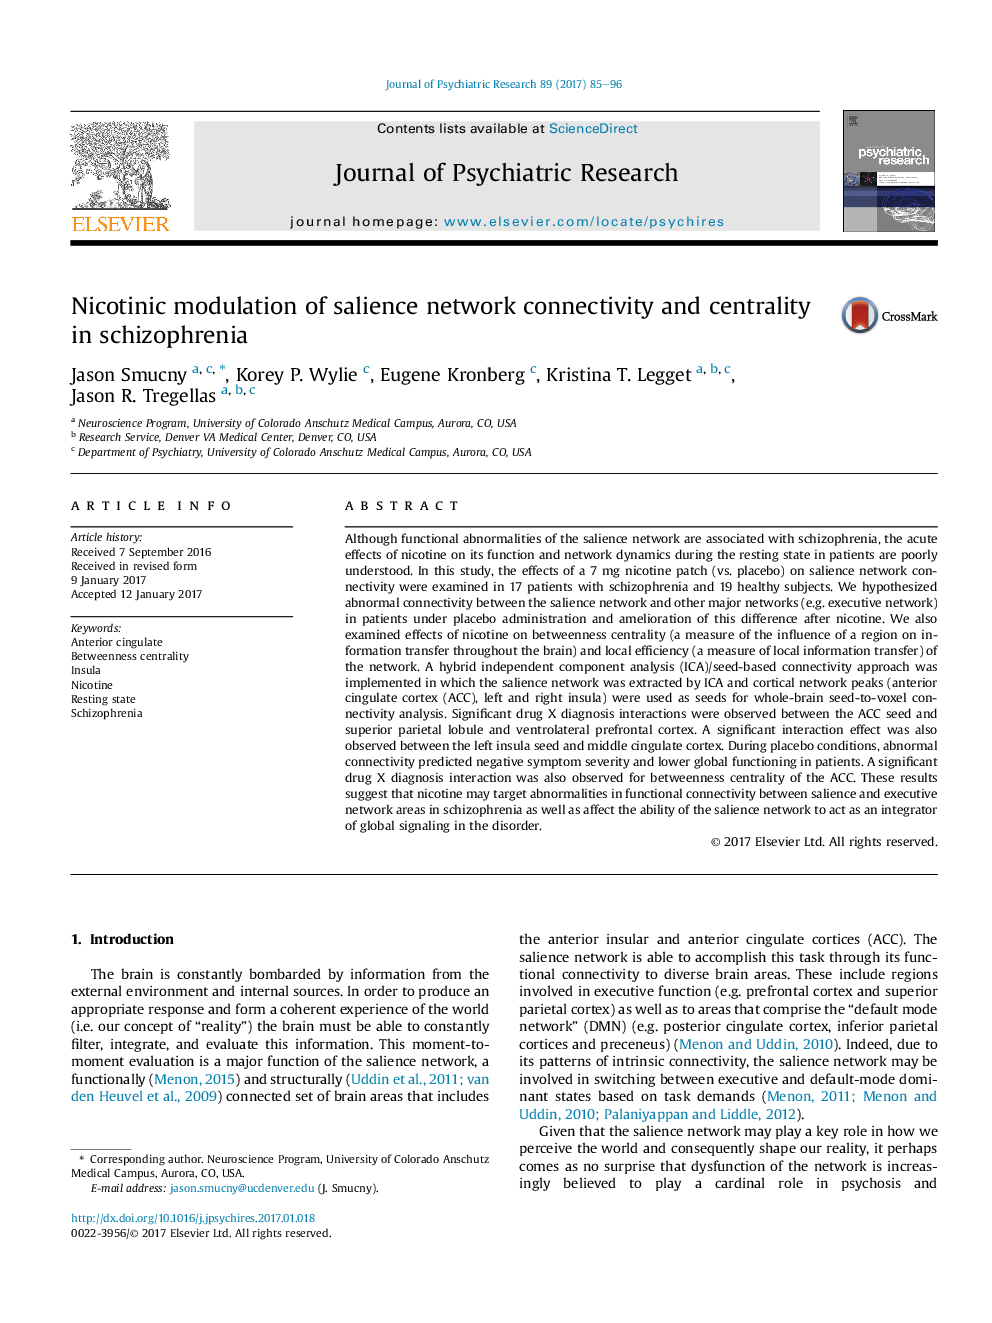 مدولاسیون نیکوتینیک اتصال شبکه مهم و مرکزیت در اسکیزوفرنیا 